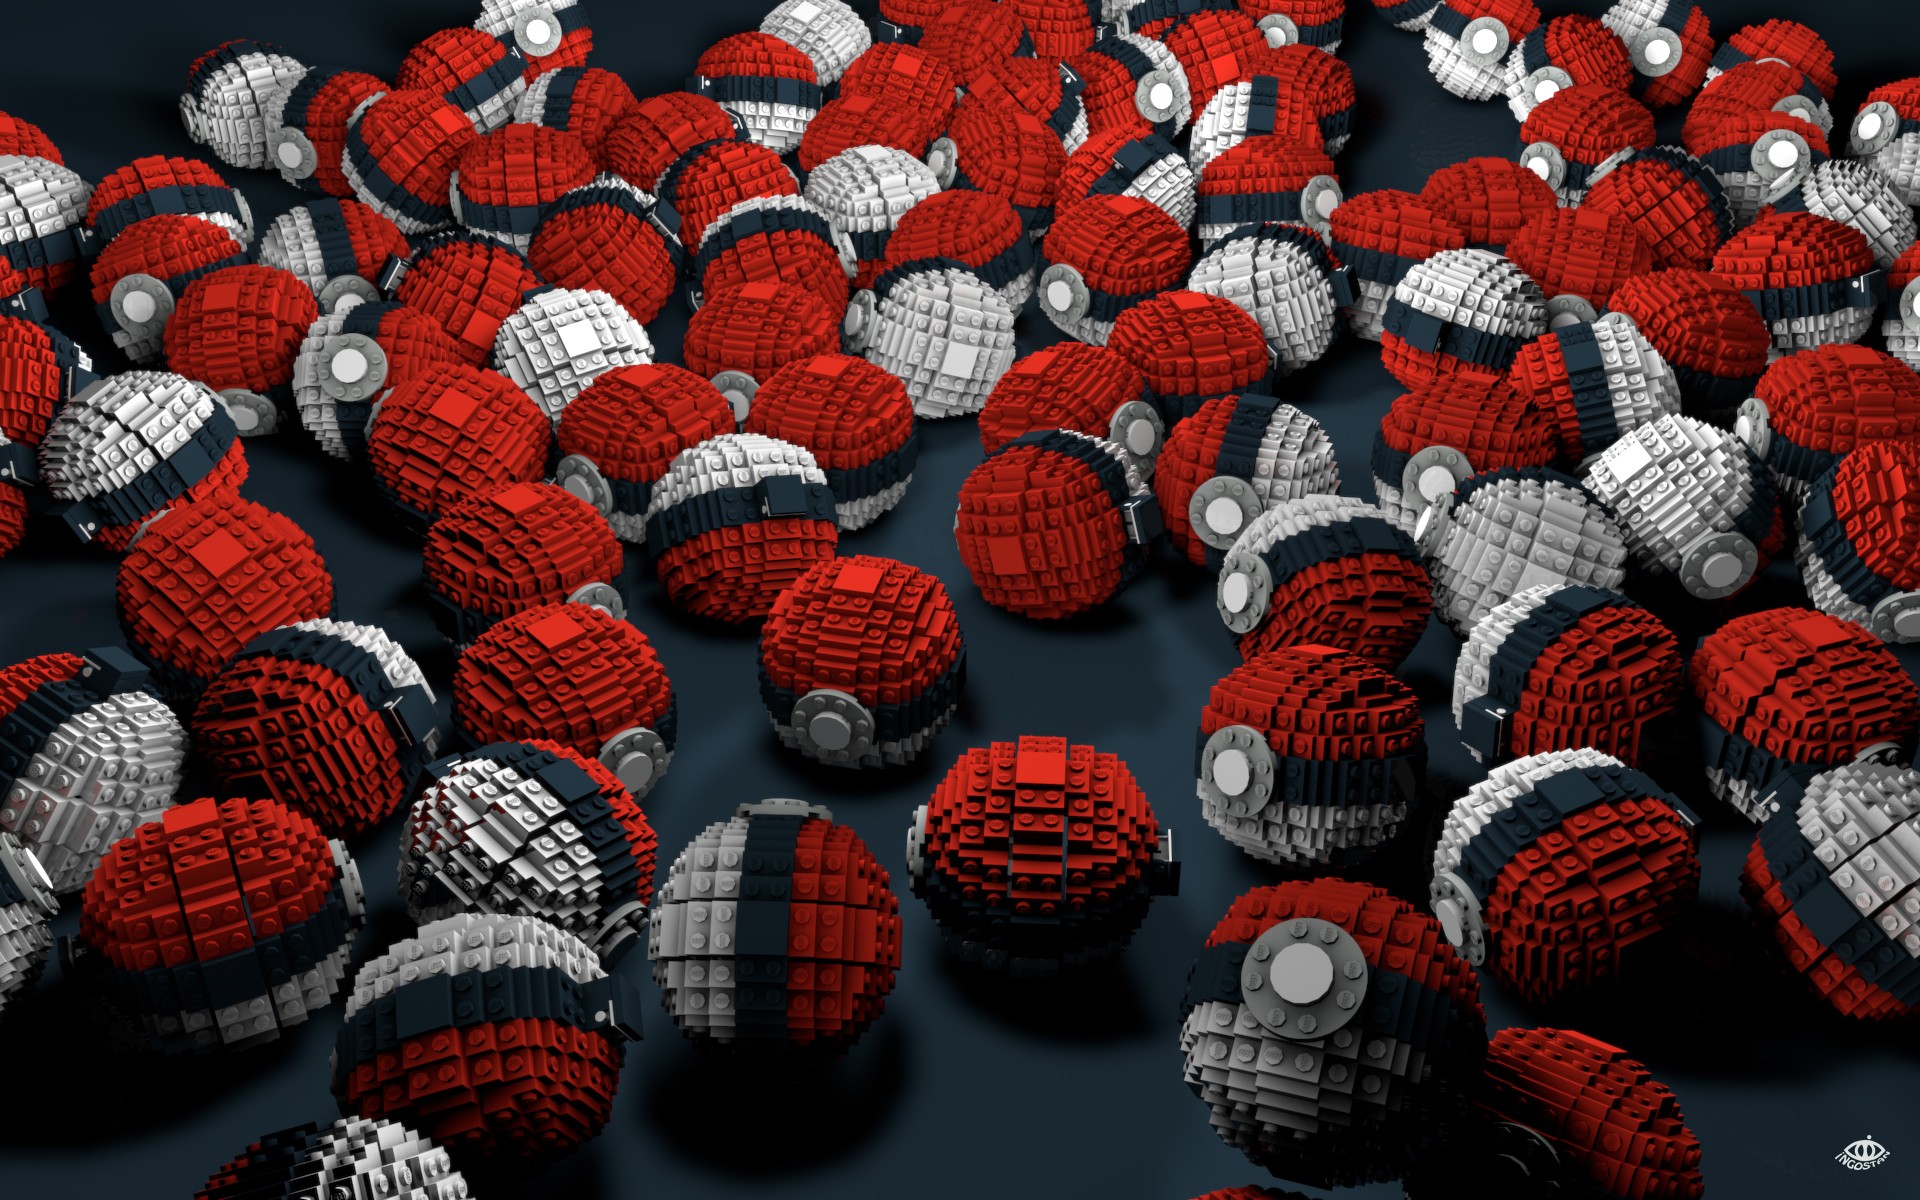 Abstract Pokemon Lego Video Games Poke Balls Voxels